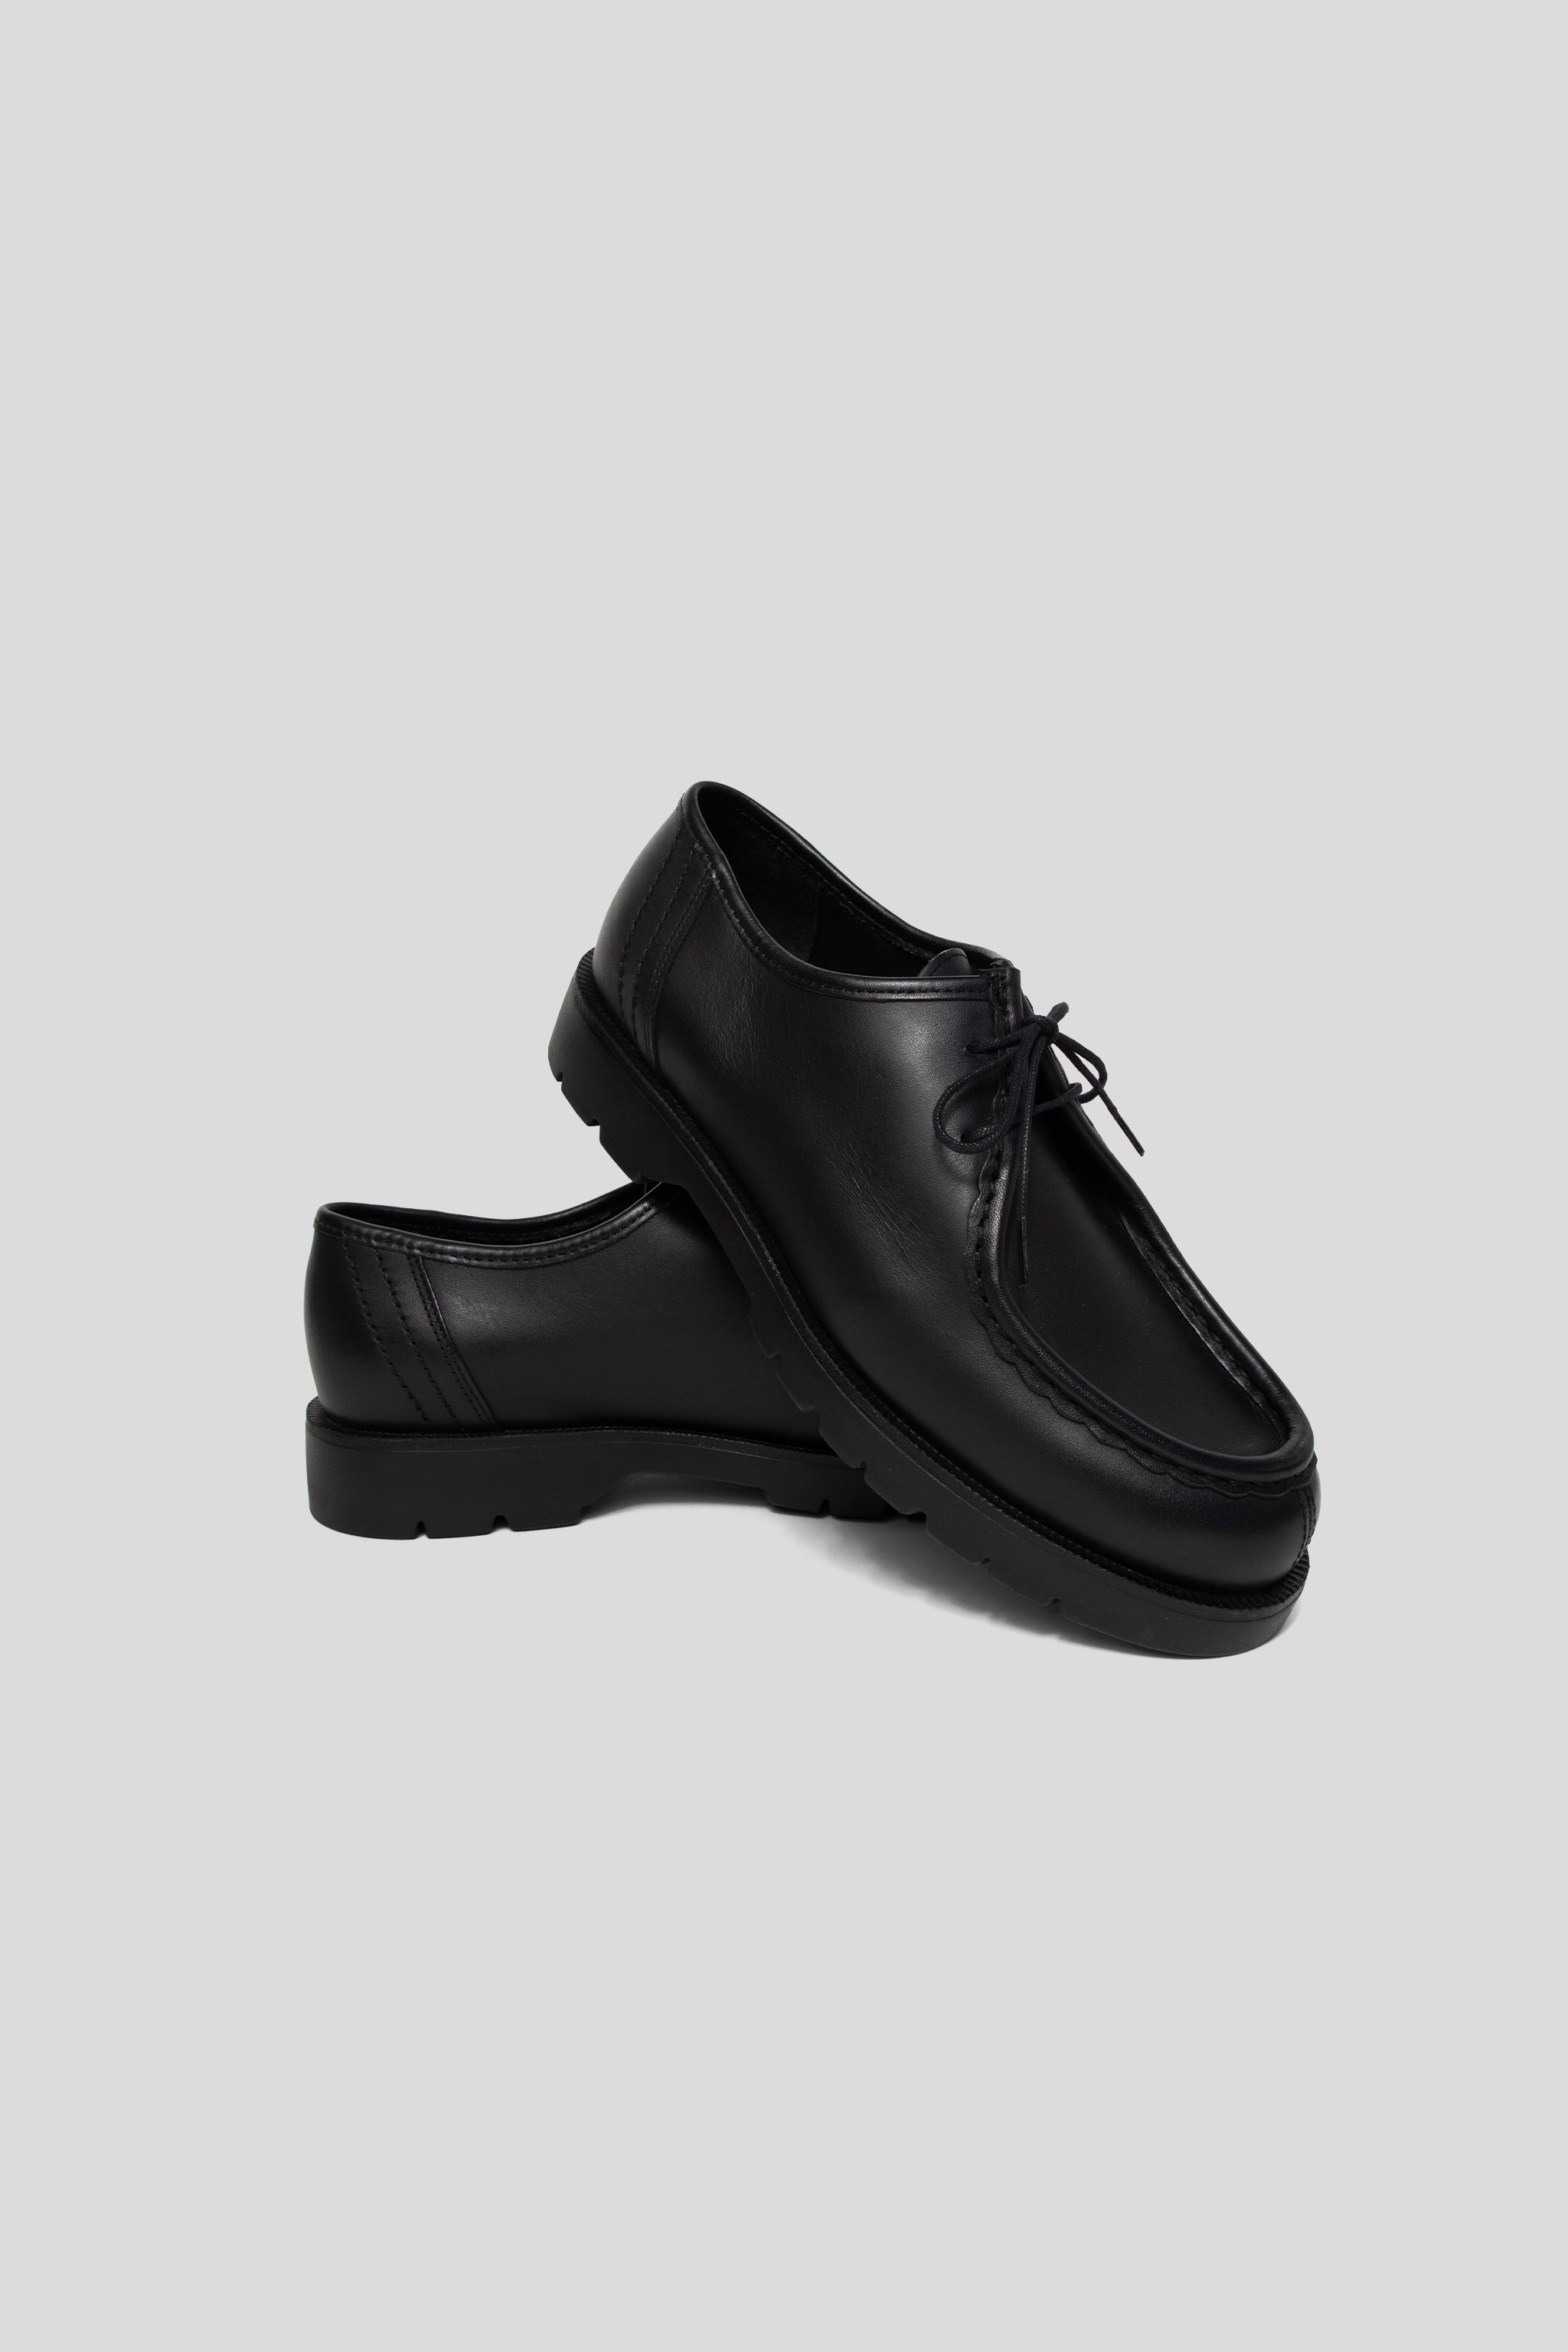 Kleman Padror Shoe in Black | Wallace Mercantile Shop